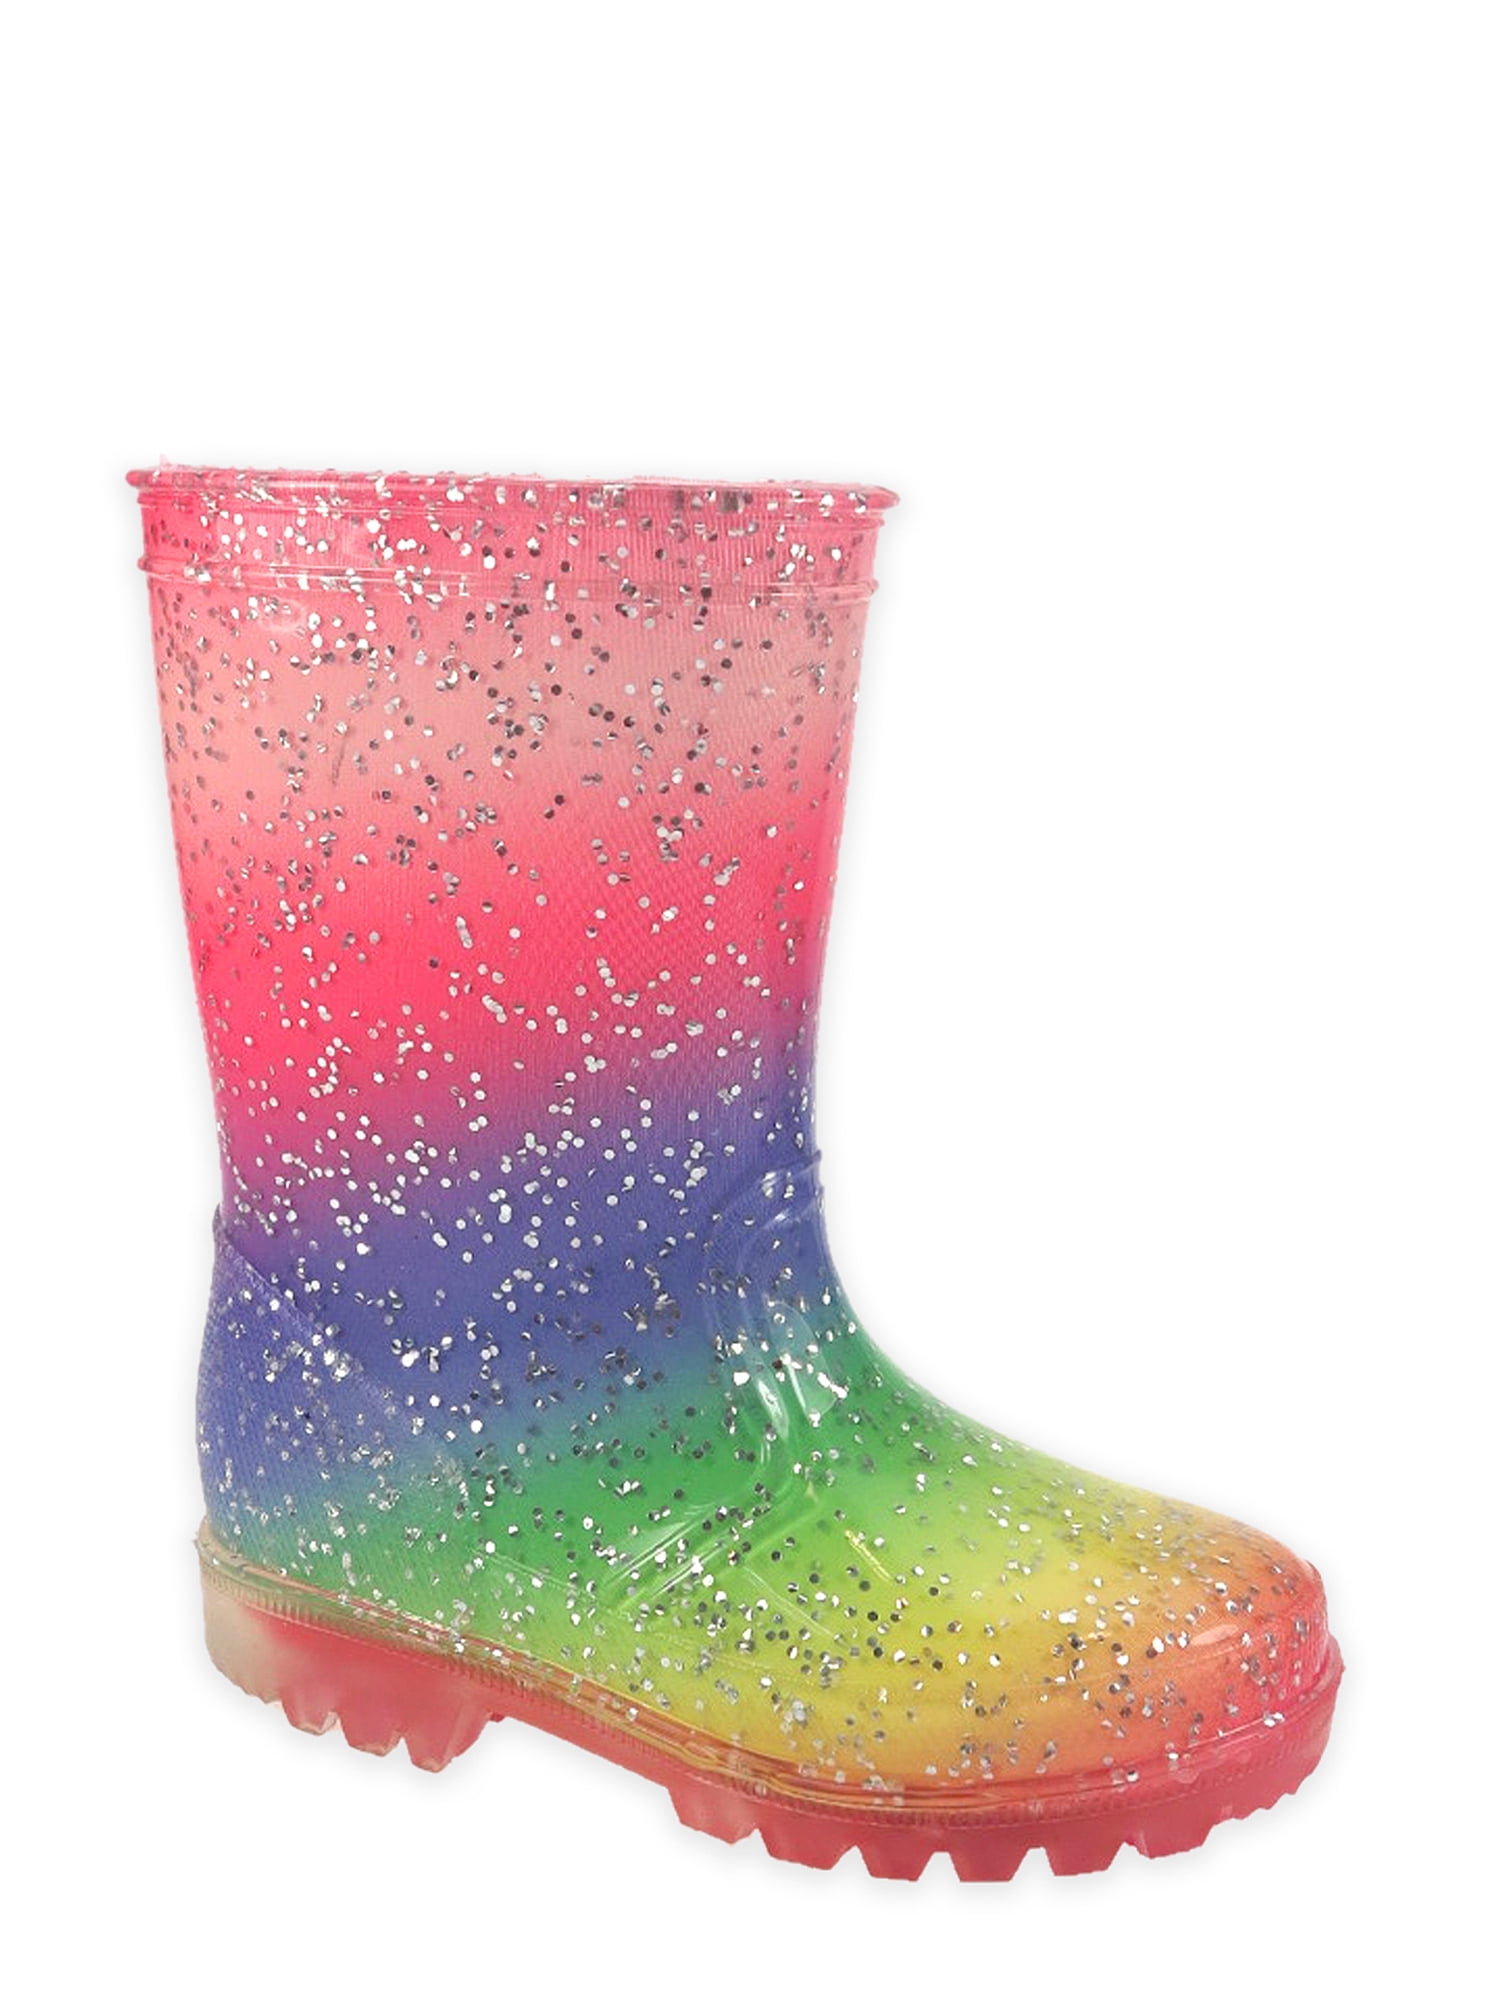 Wonder nation children's light up rain boots 